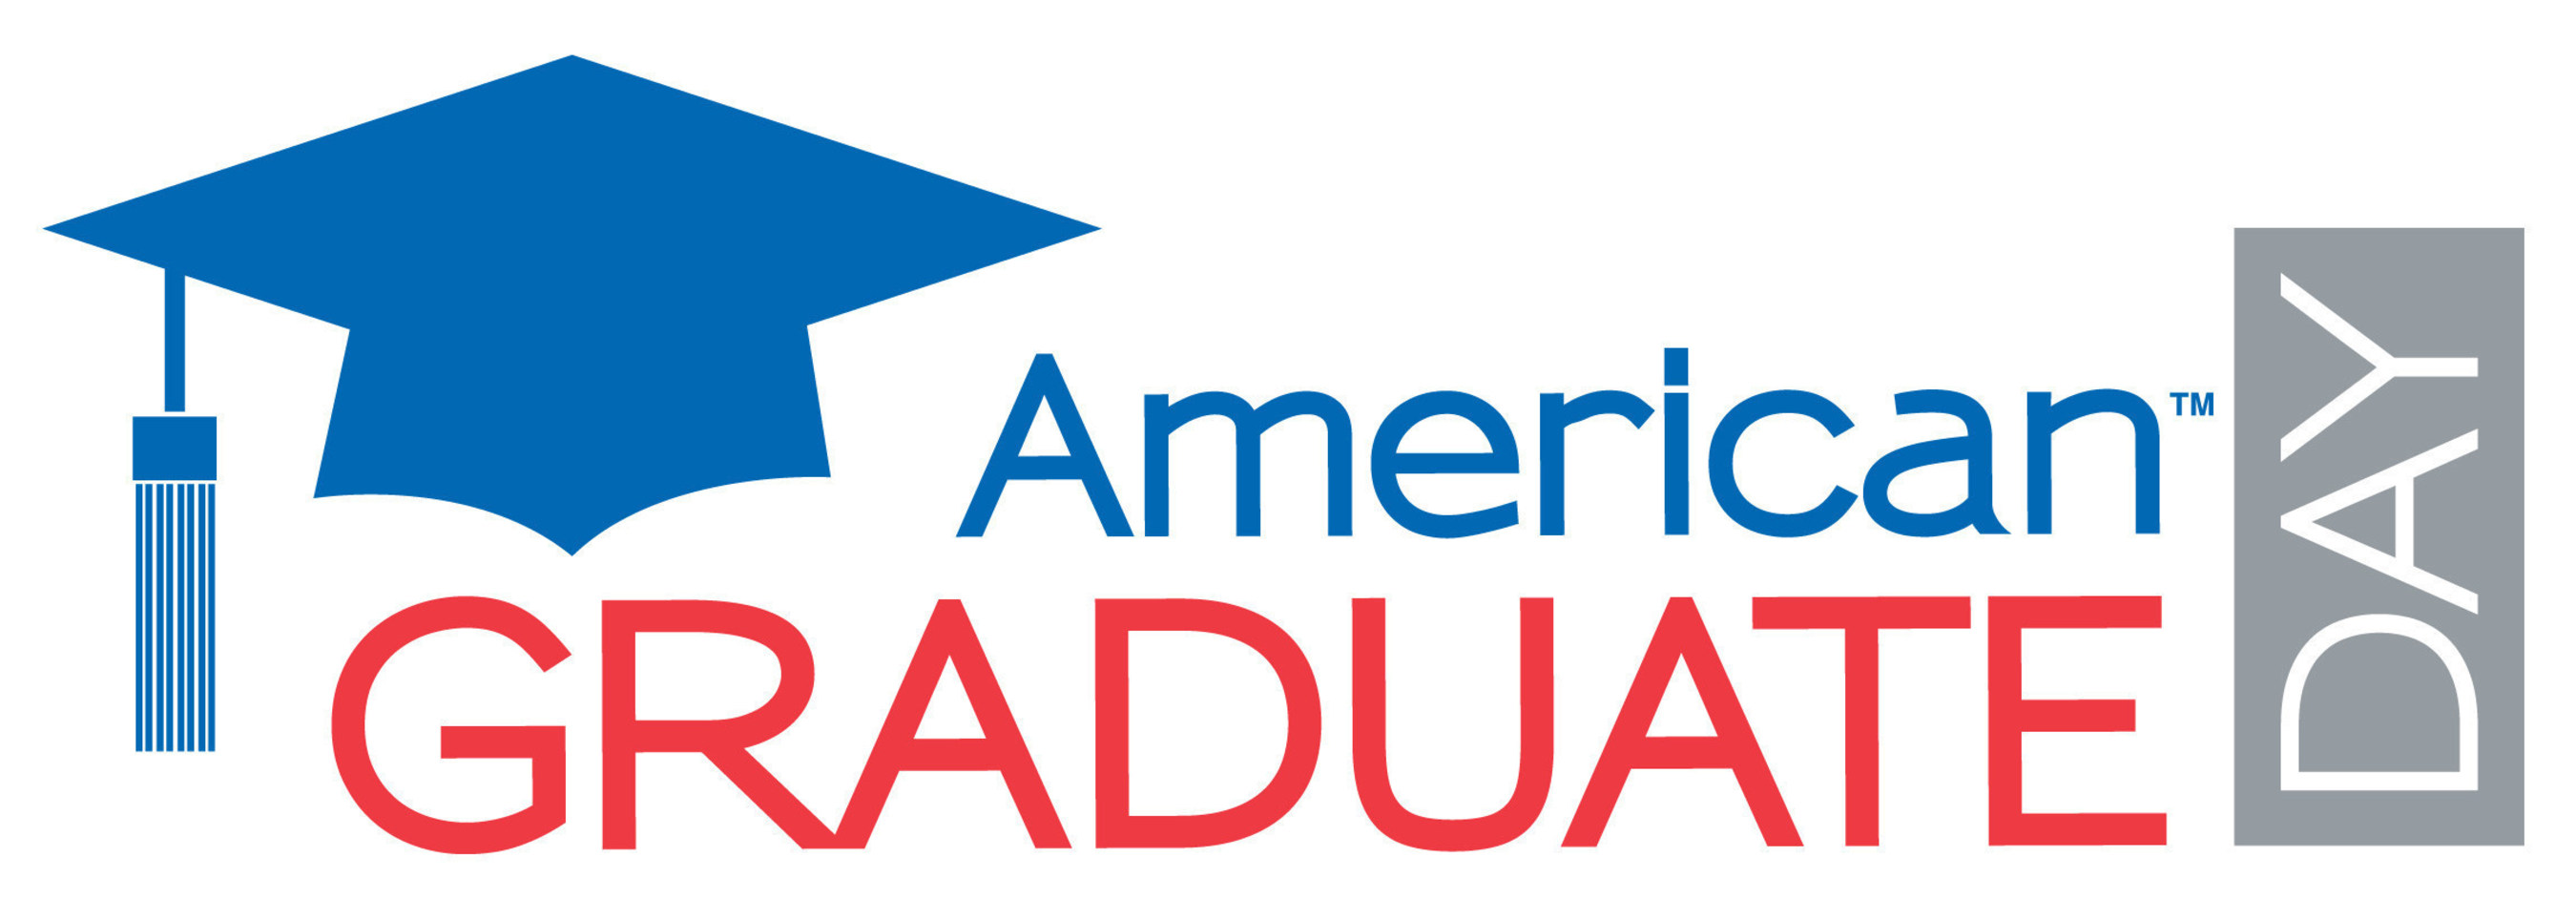 American Graduate Day Logo